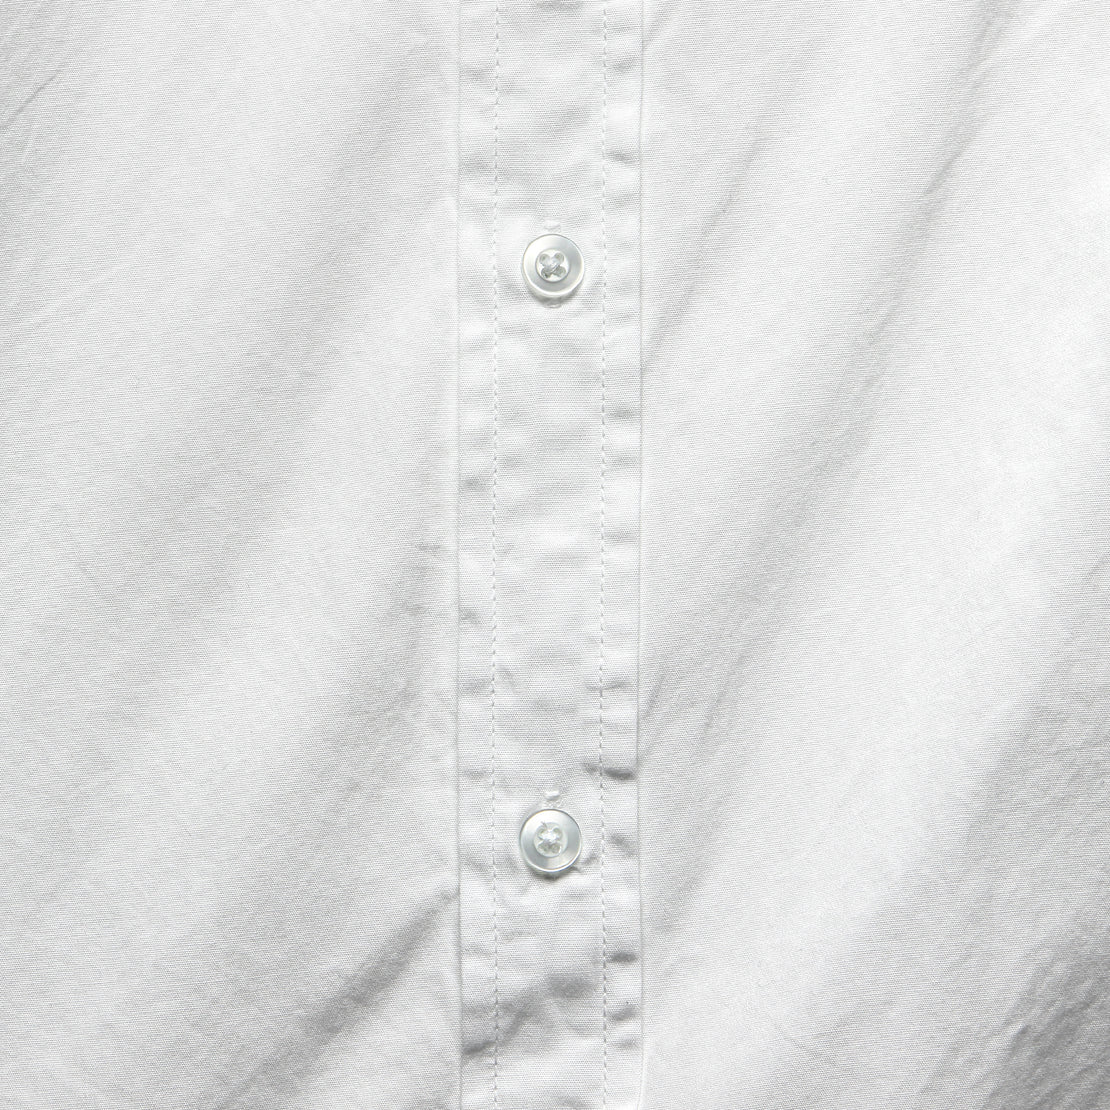 Poplin Standard Shirt - White